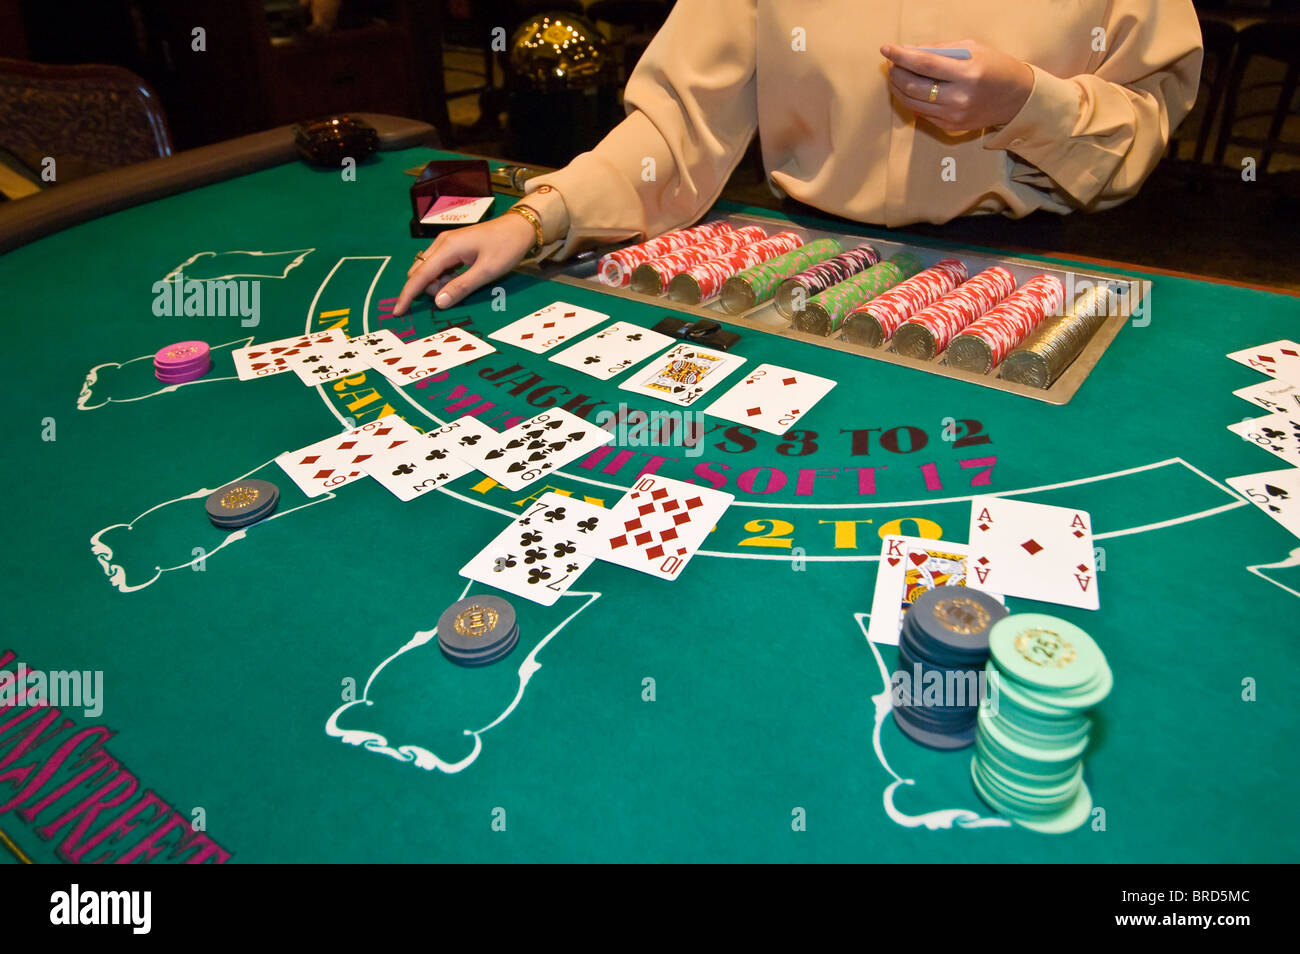 lowest las vegas casino table games